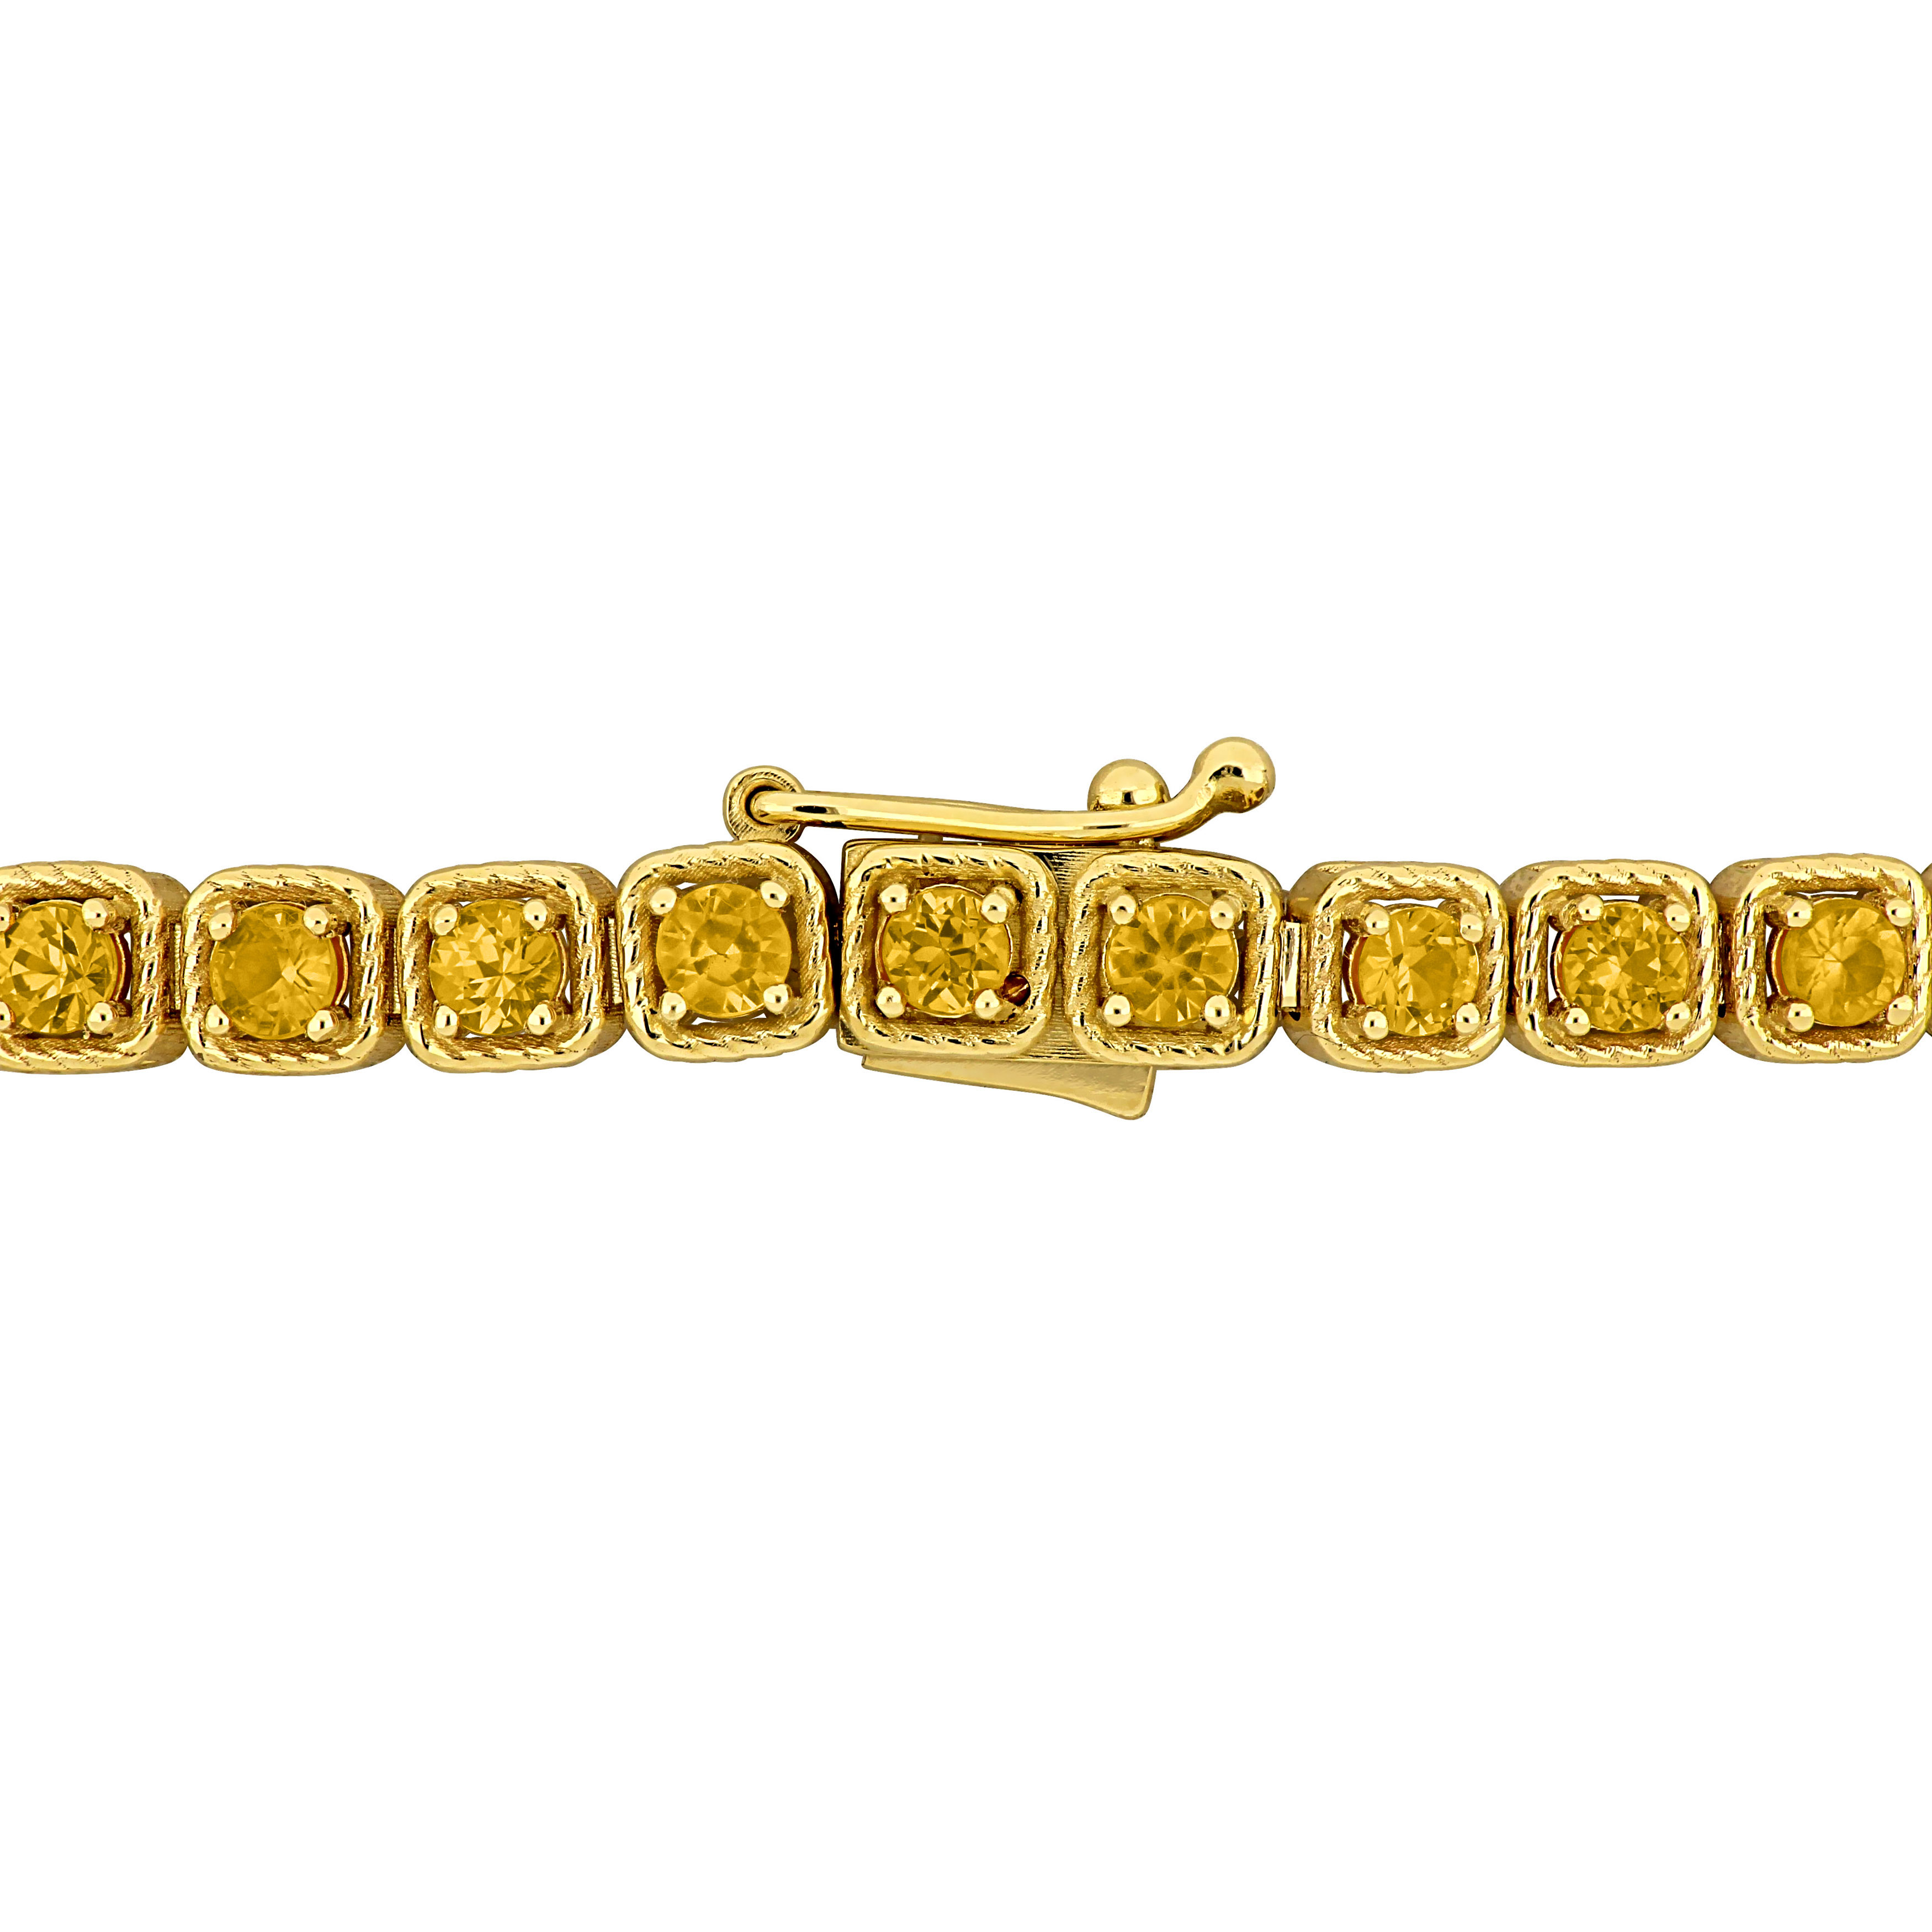 4 4/5 CT TGW Yellow Sapphire Tennis Bracelet in 14K Yellow Gold